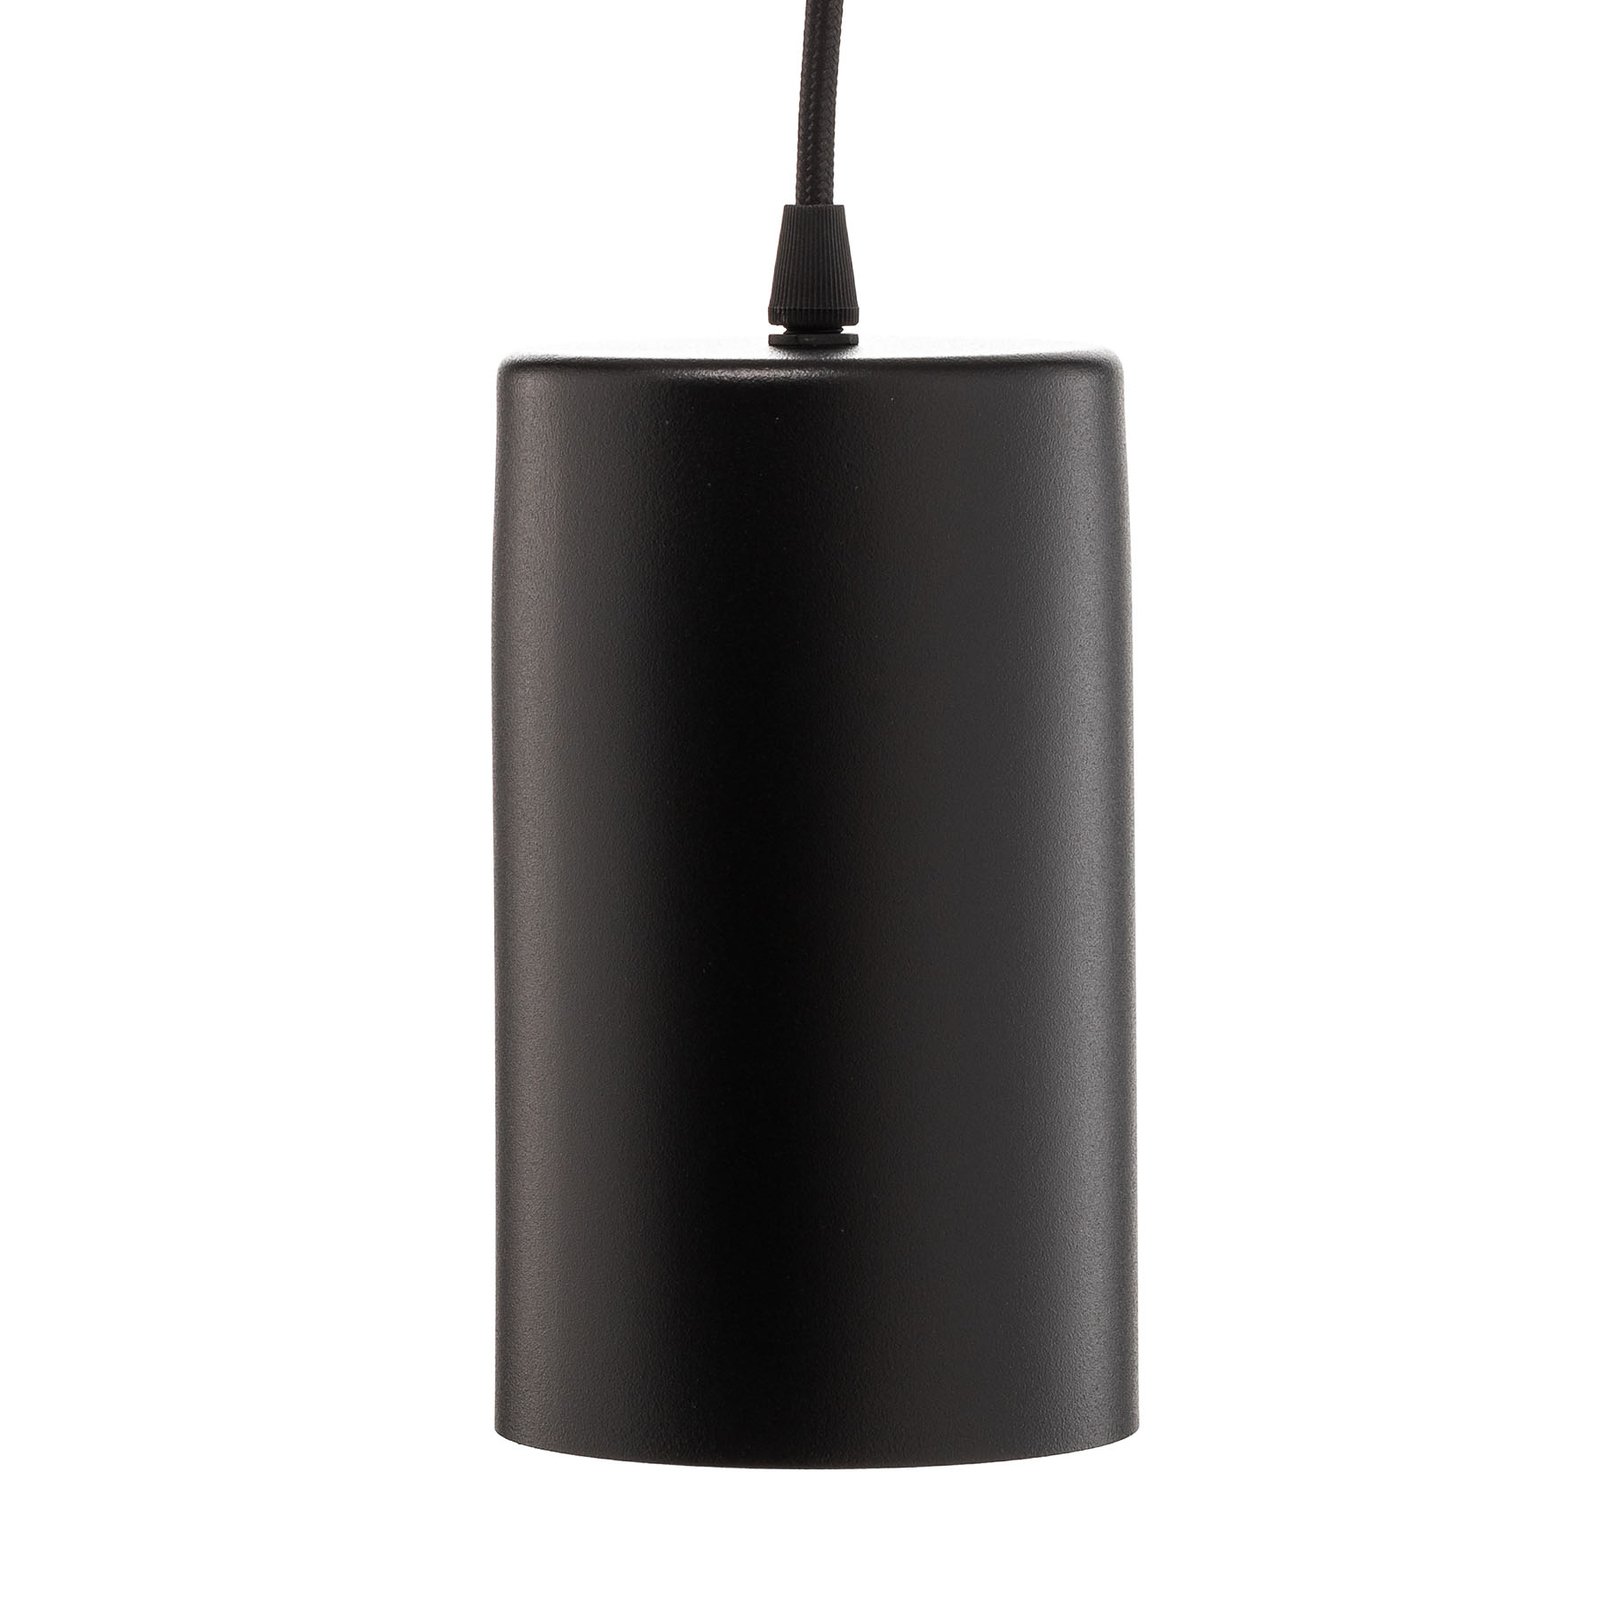 ZW Tube 170 pendant light, 5-bulb, black